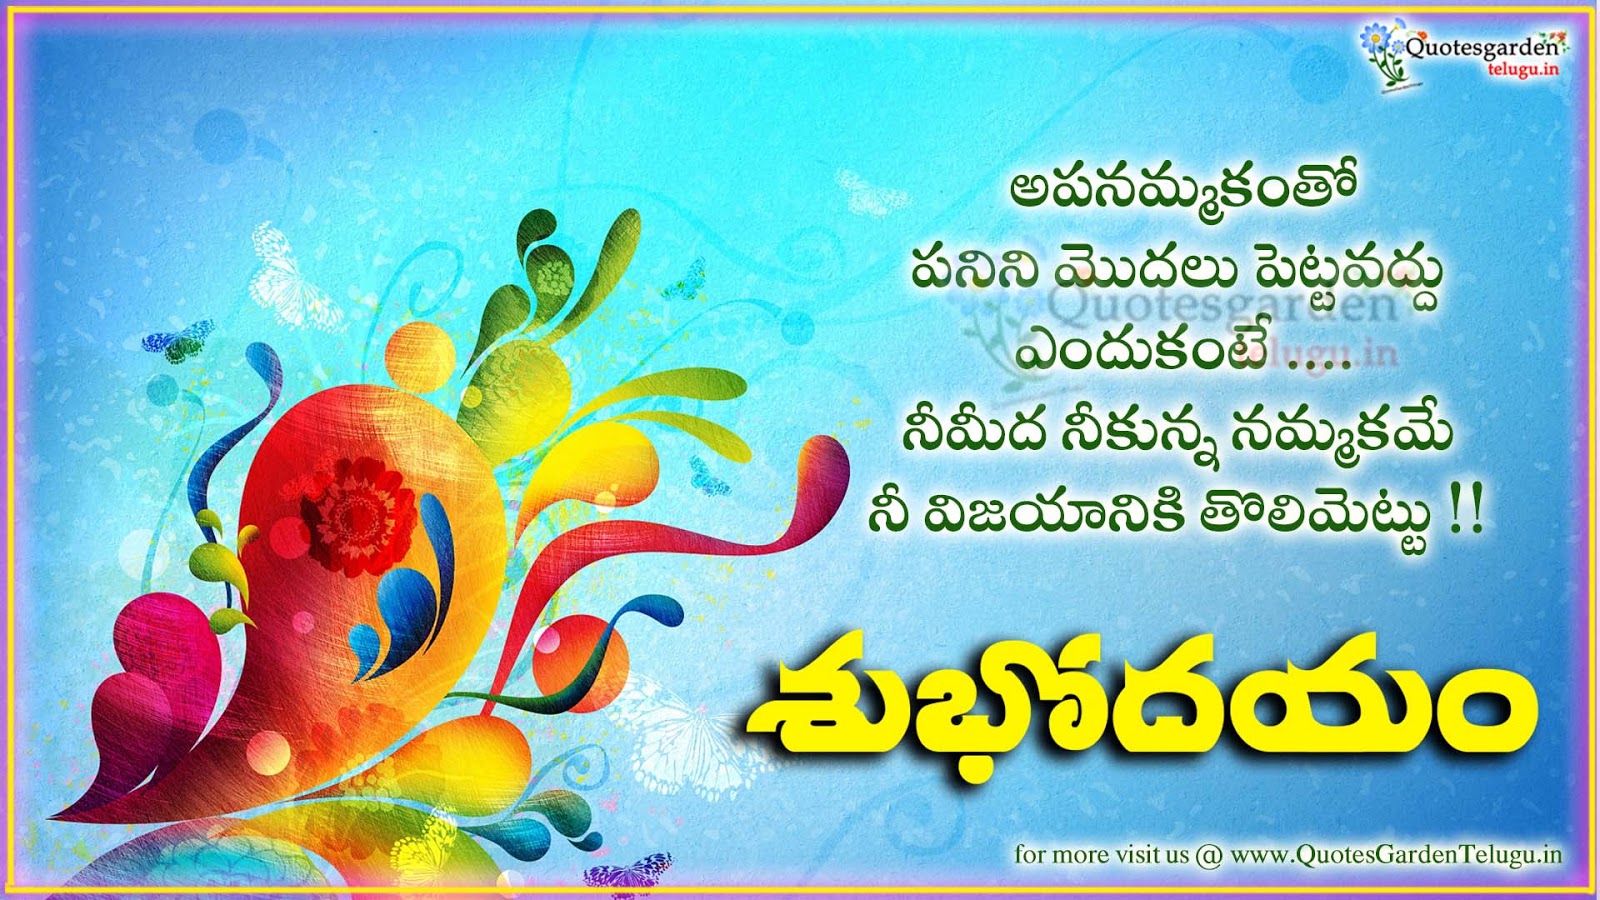 Good morning Telugu wishes messages | QUOTES GARDEN TELUGU ...